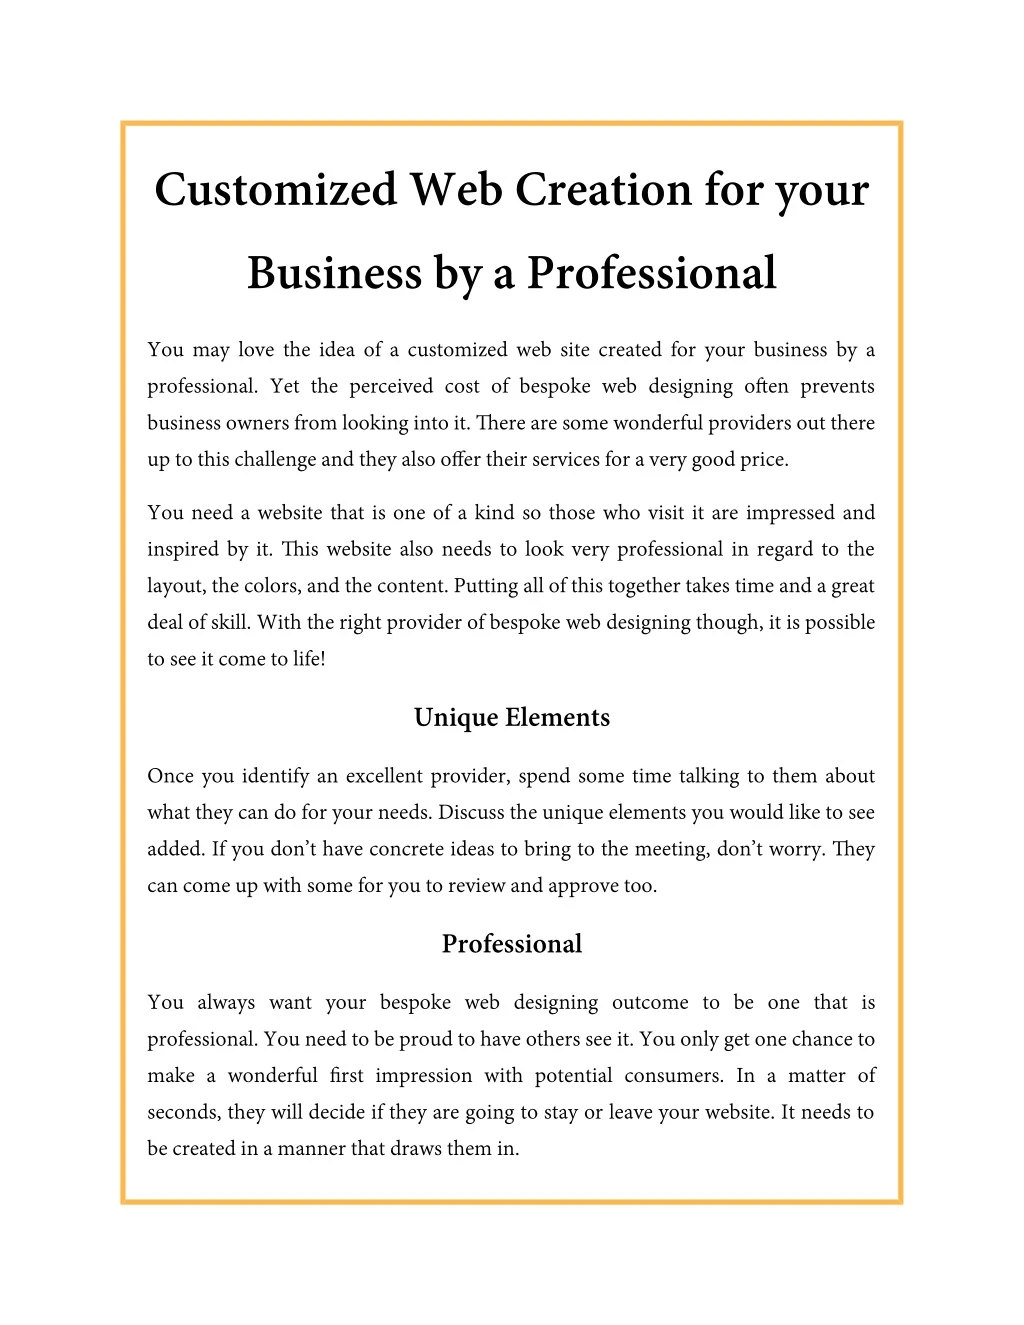 custom i zed w eb creati on for your busi ness